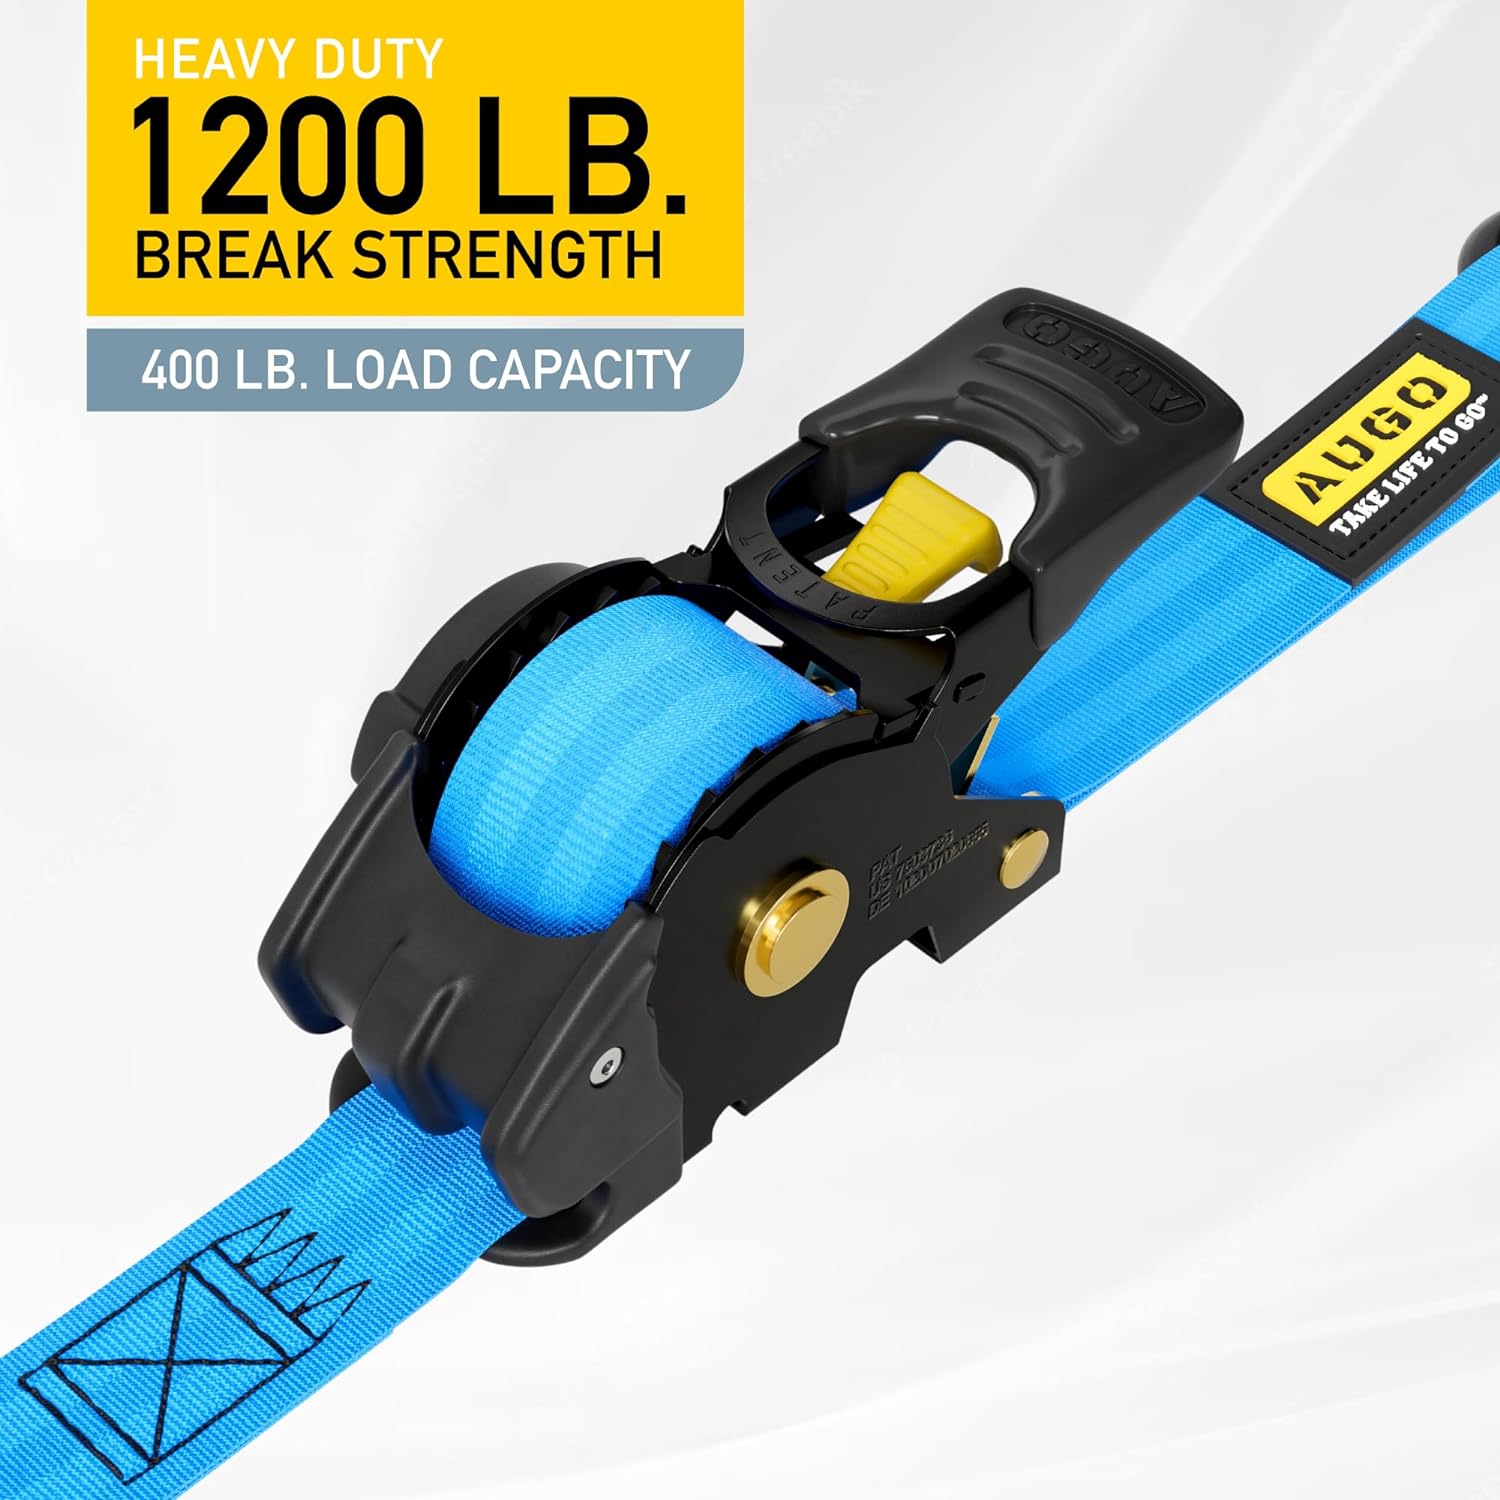 Retractable Ratchet Straps - 4 Pack - 1200 lb Break Strength